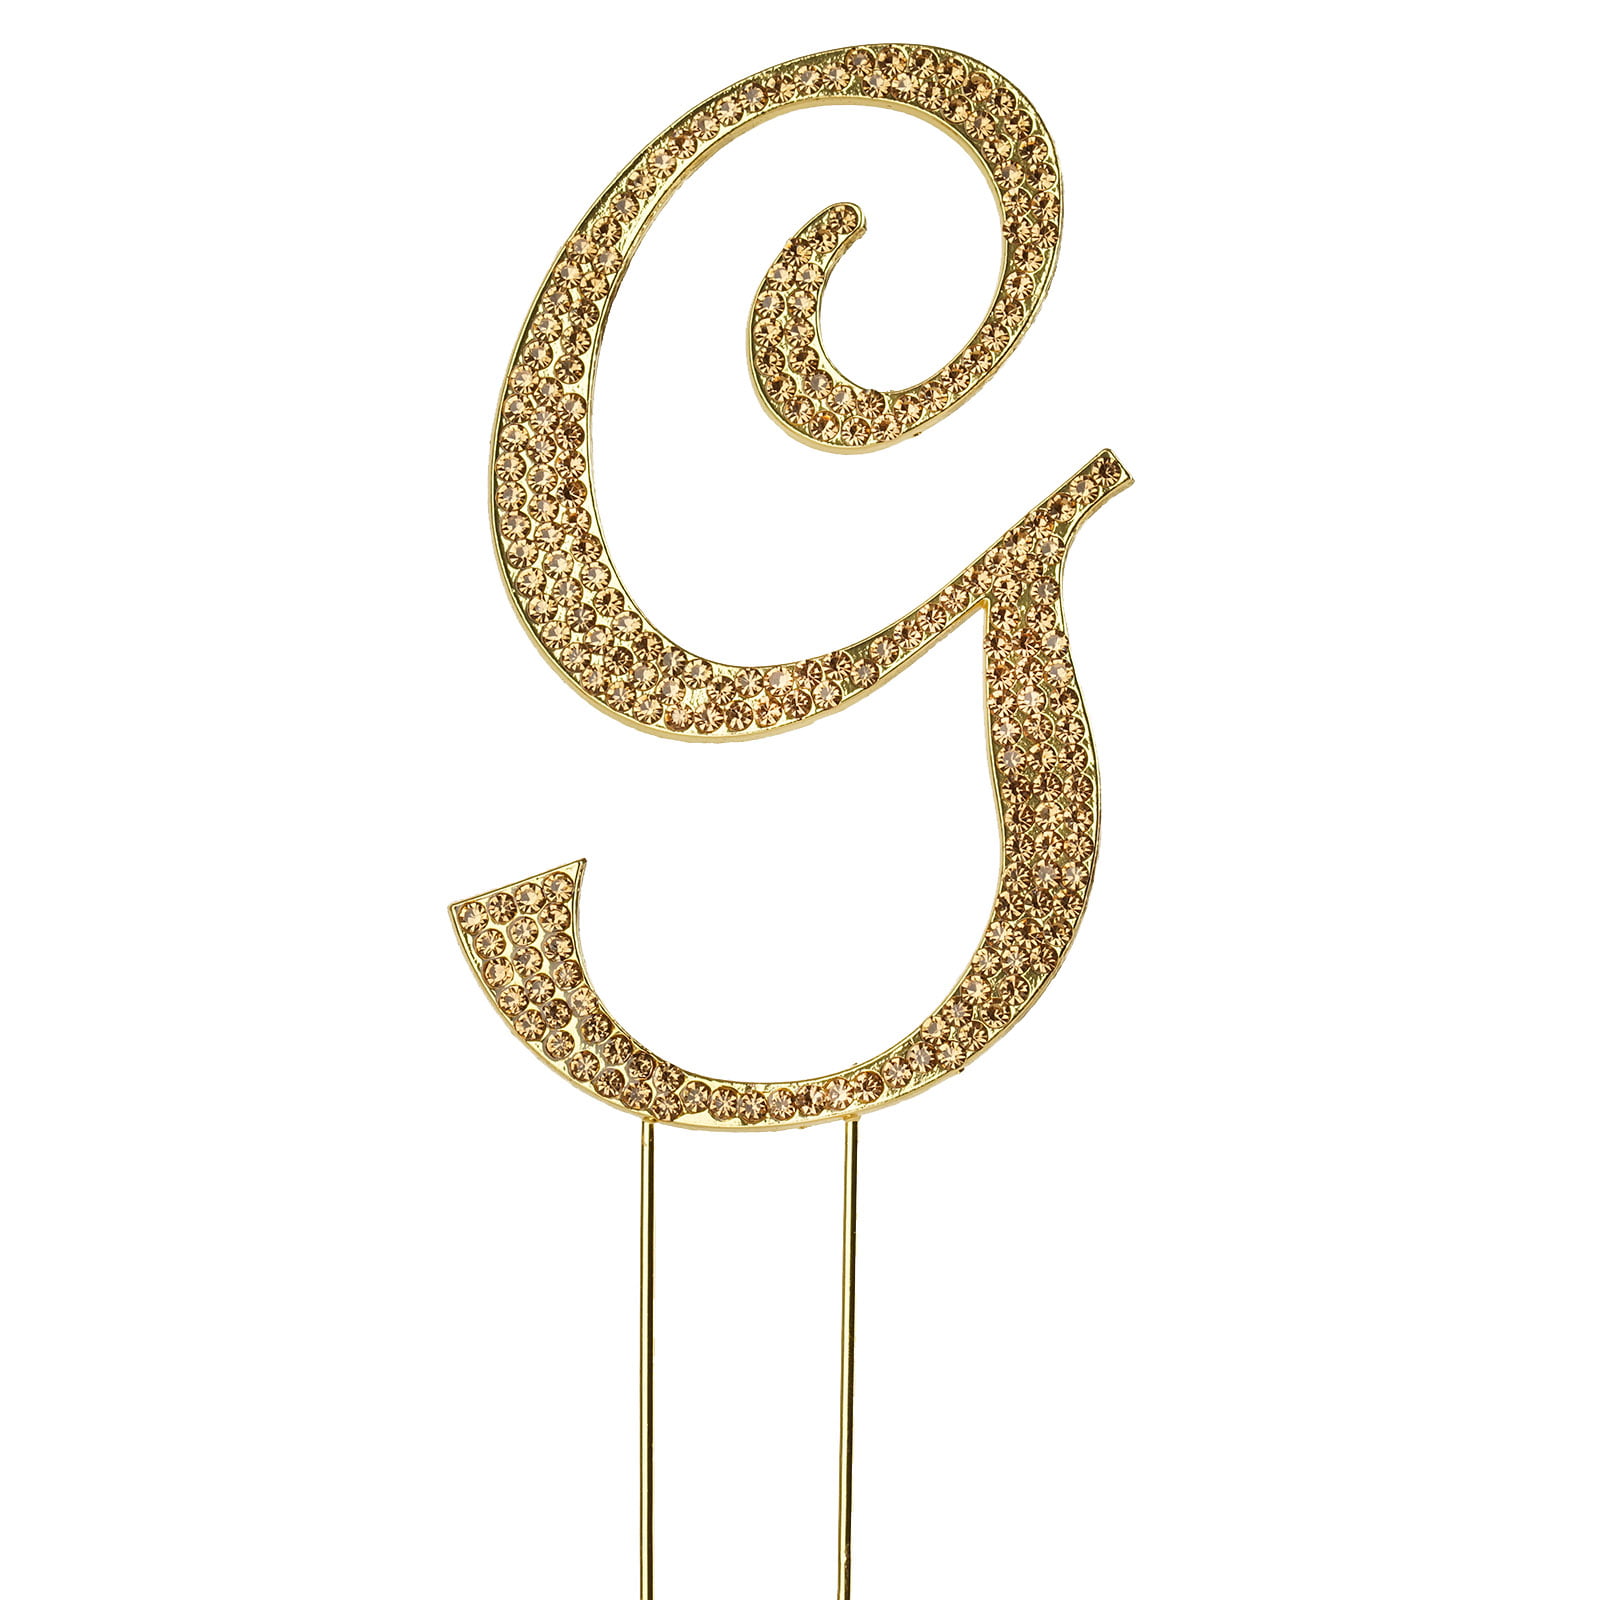 GOLD Plated Rhinestone  Monogram Letter “C”  Wedding Cake Topper  5" inch high 